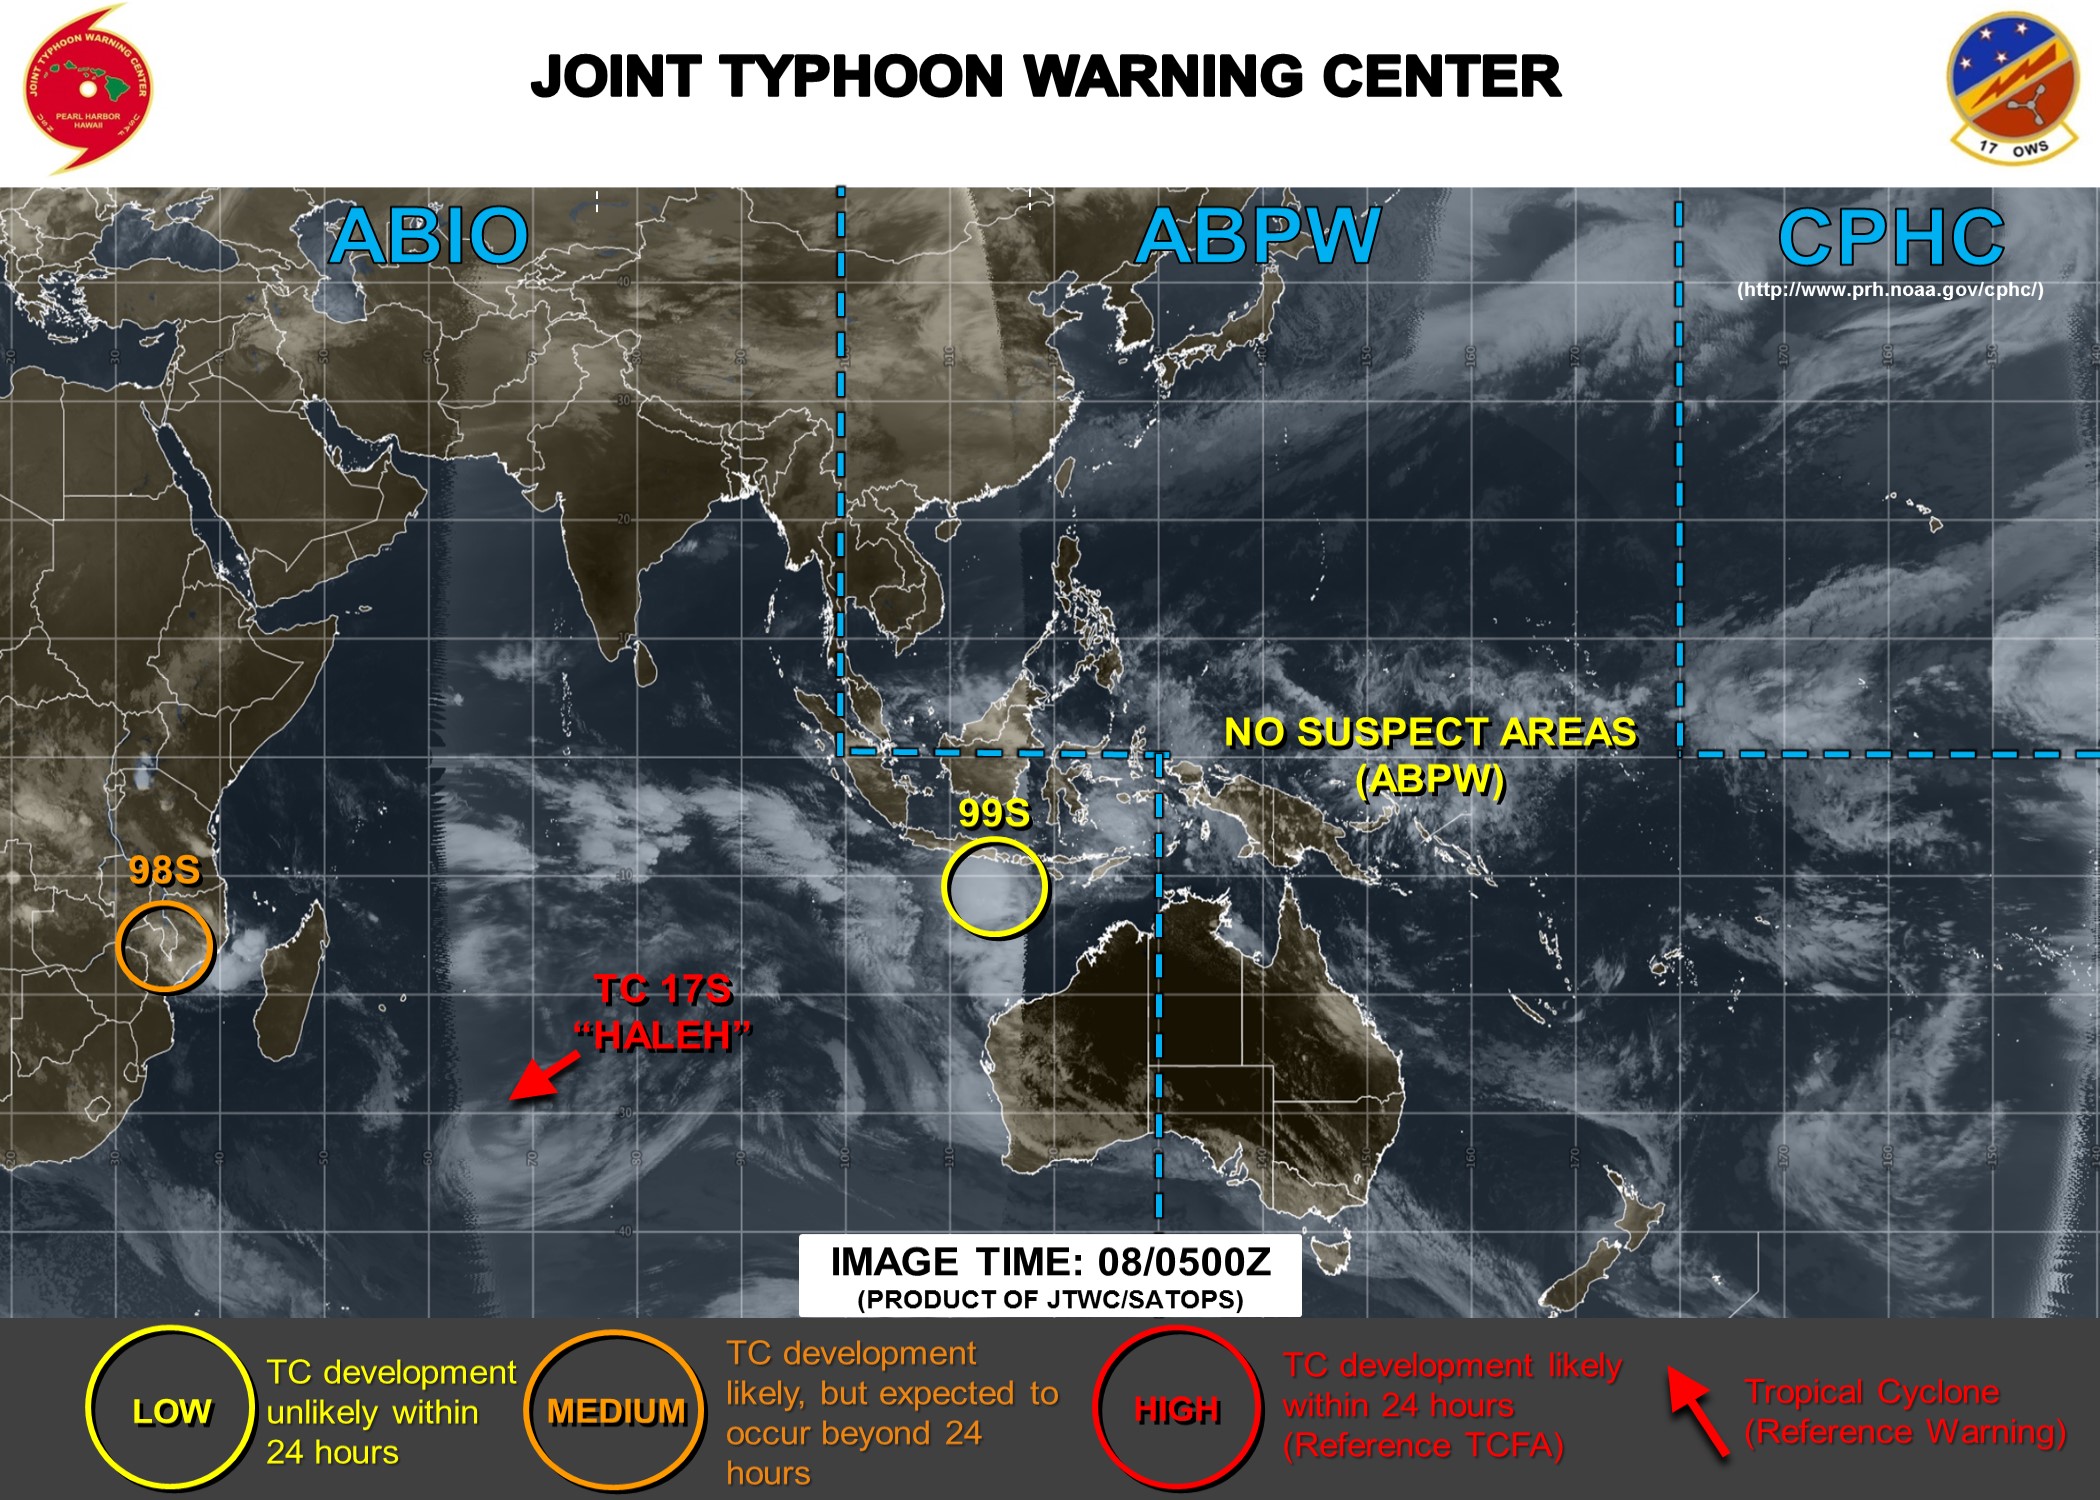 CYCLONES: Sud Indien: 3 systèmes dans les radars du Joint Typhoon Warning Center